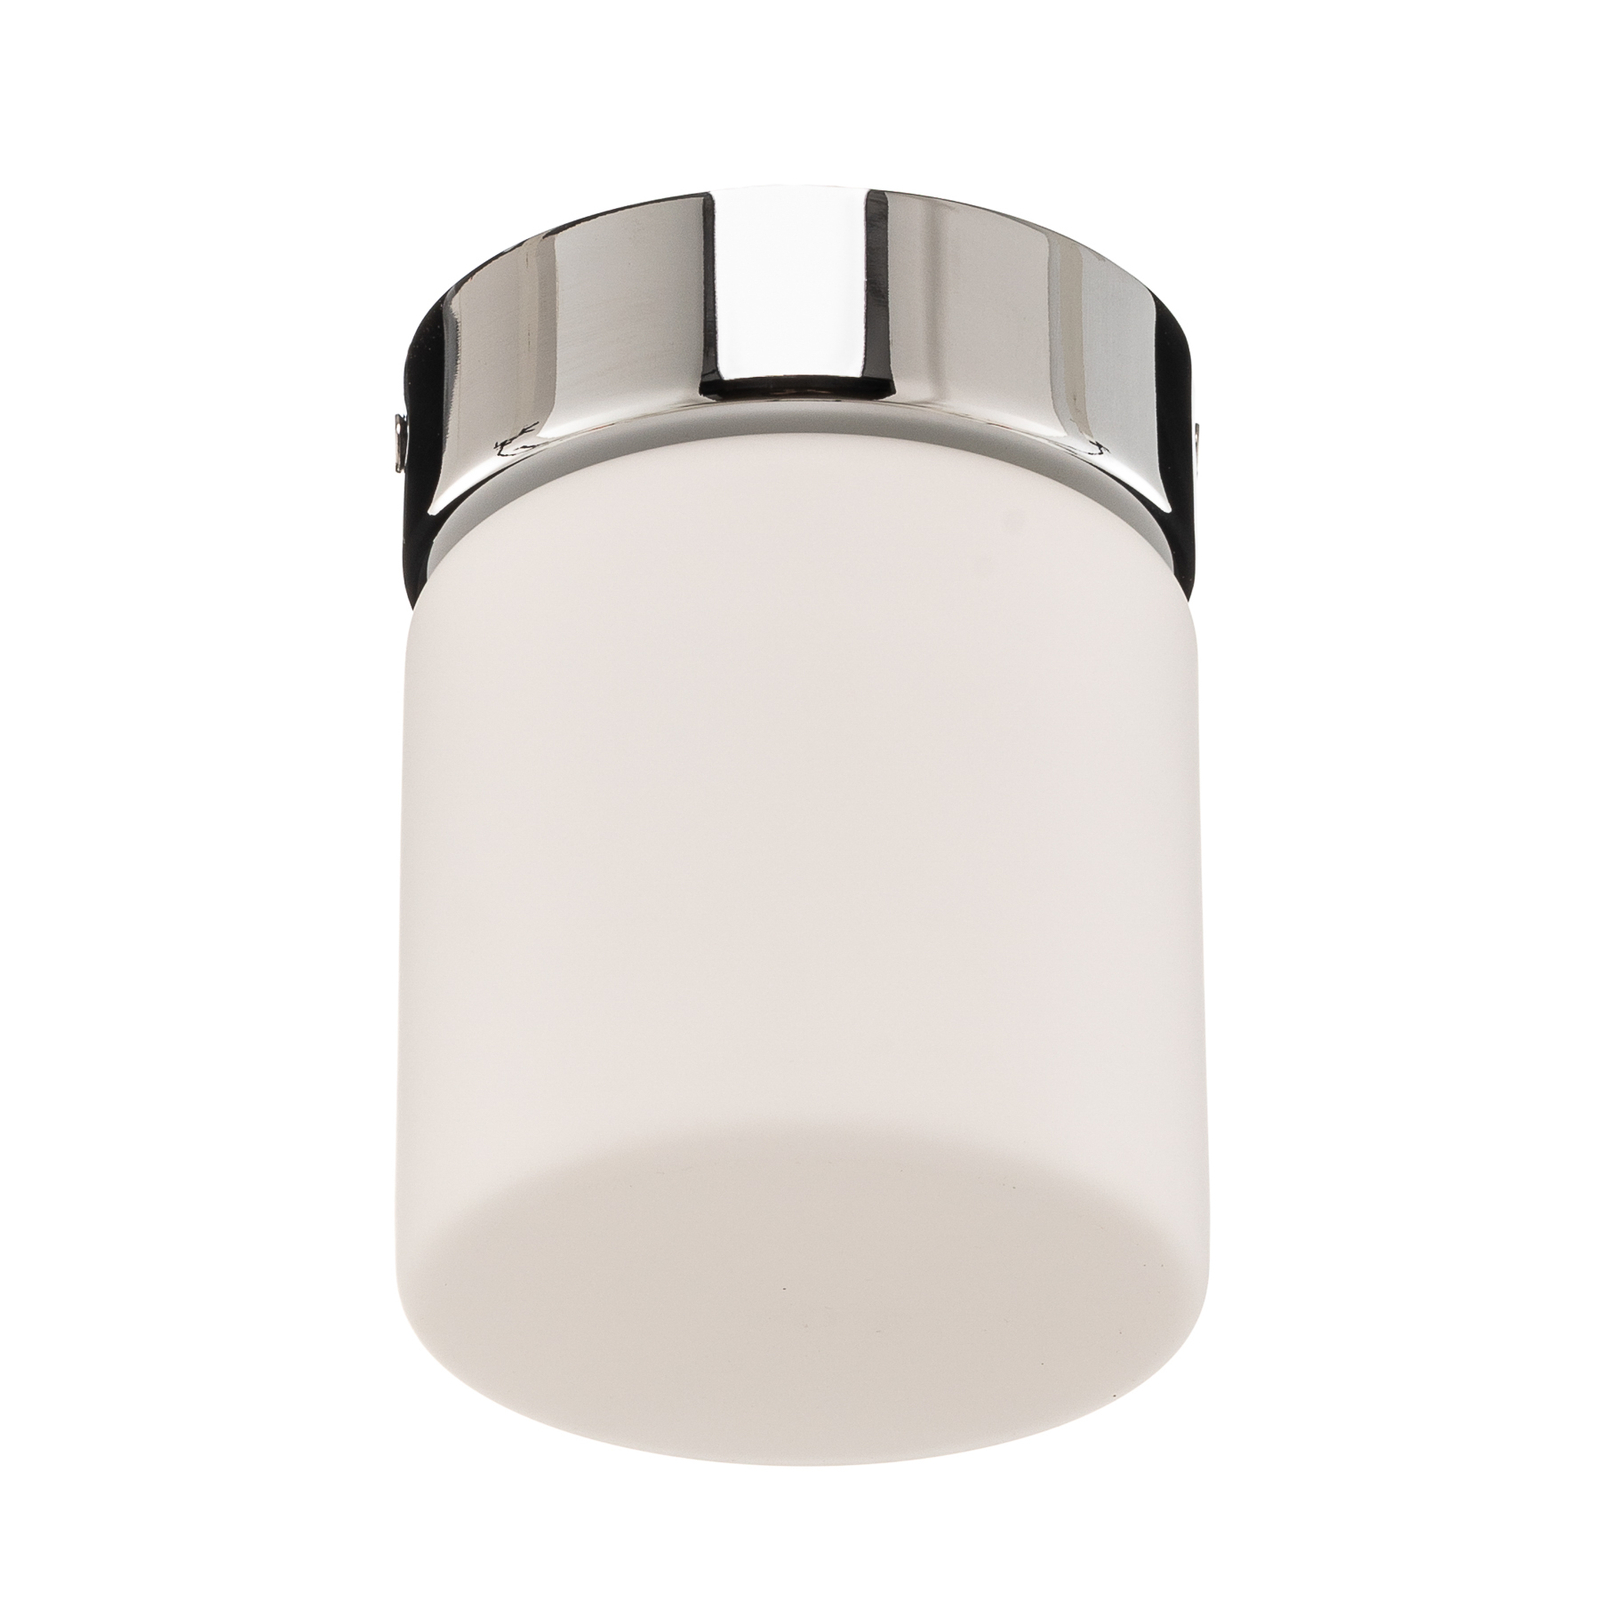 Helestra Keto LED plafondlamp, cilinder, chroom